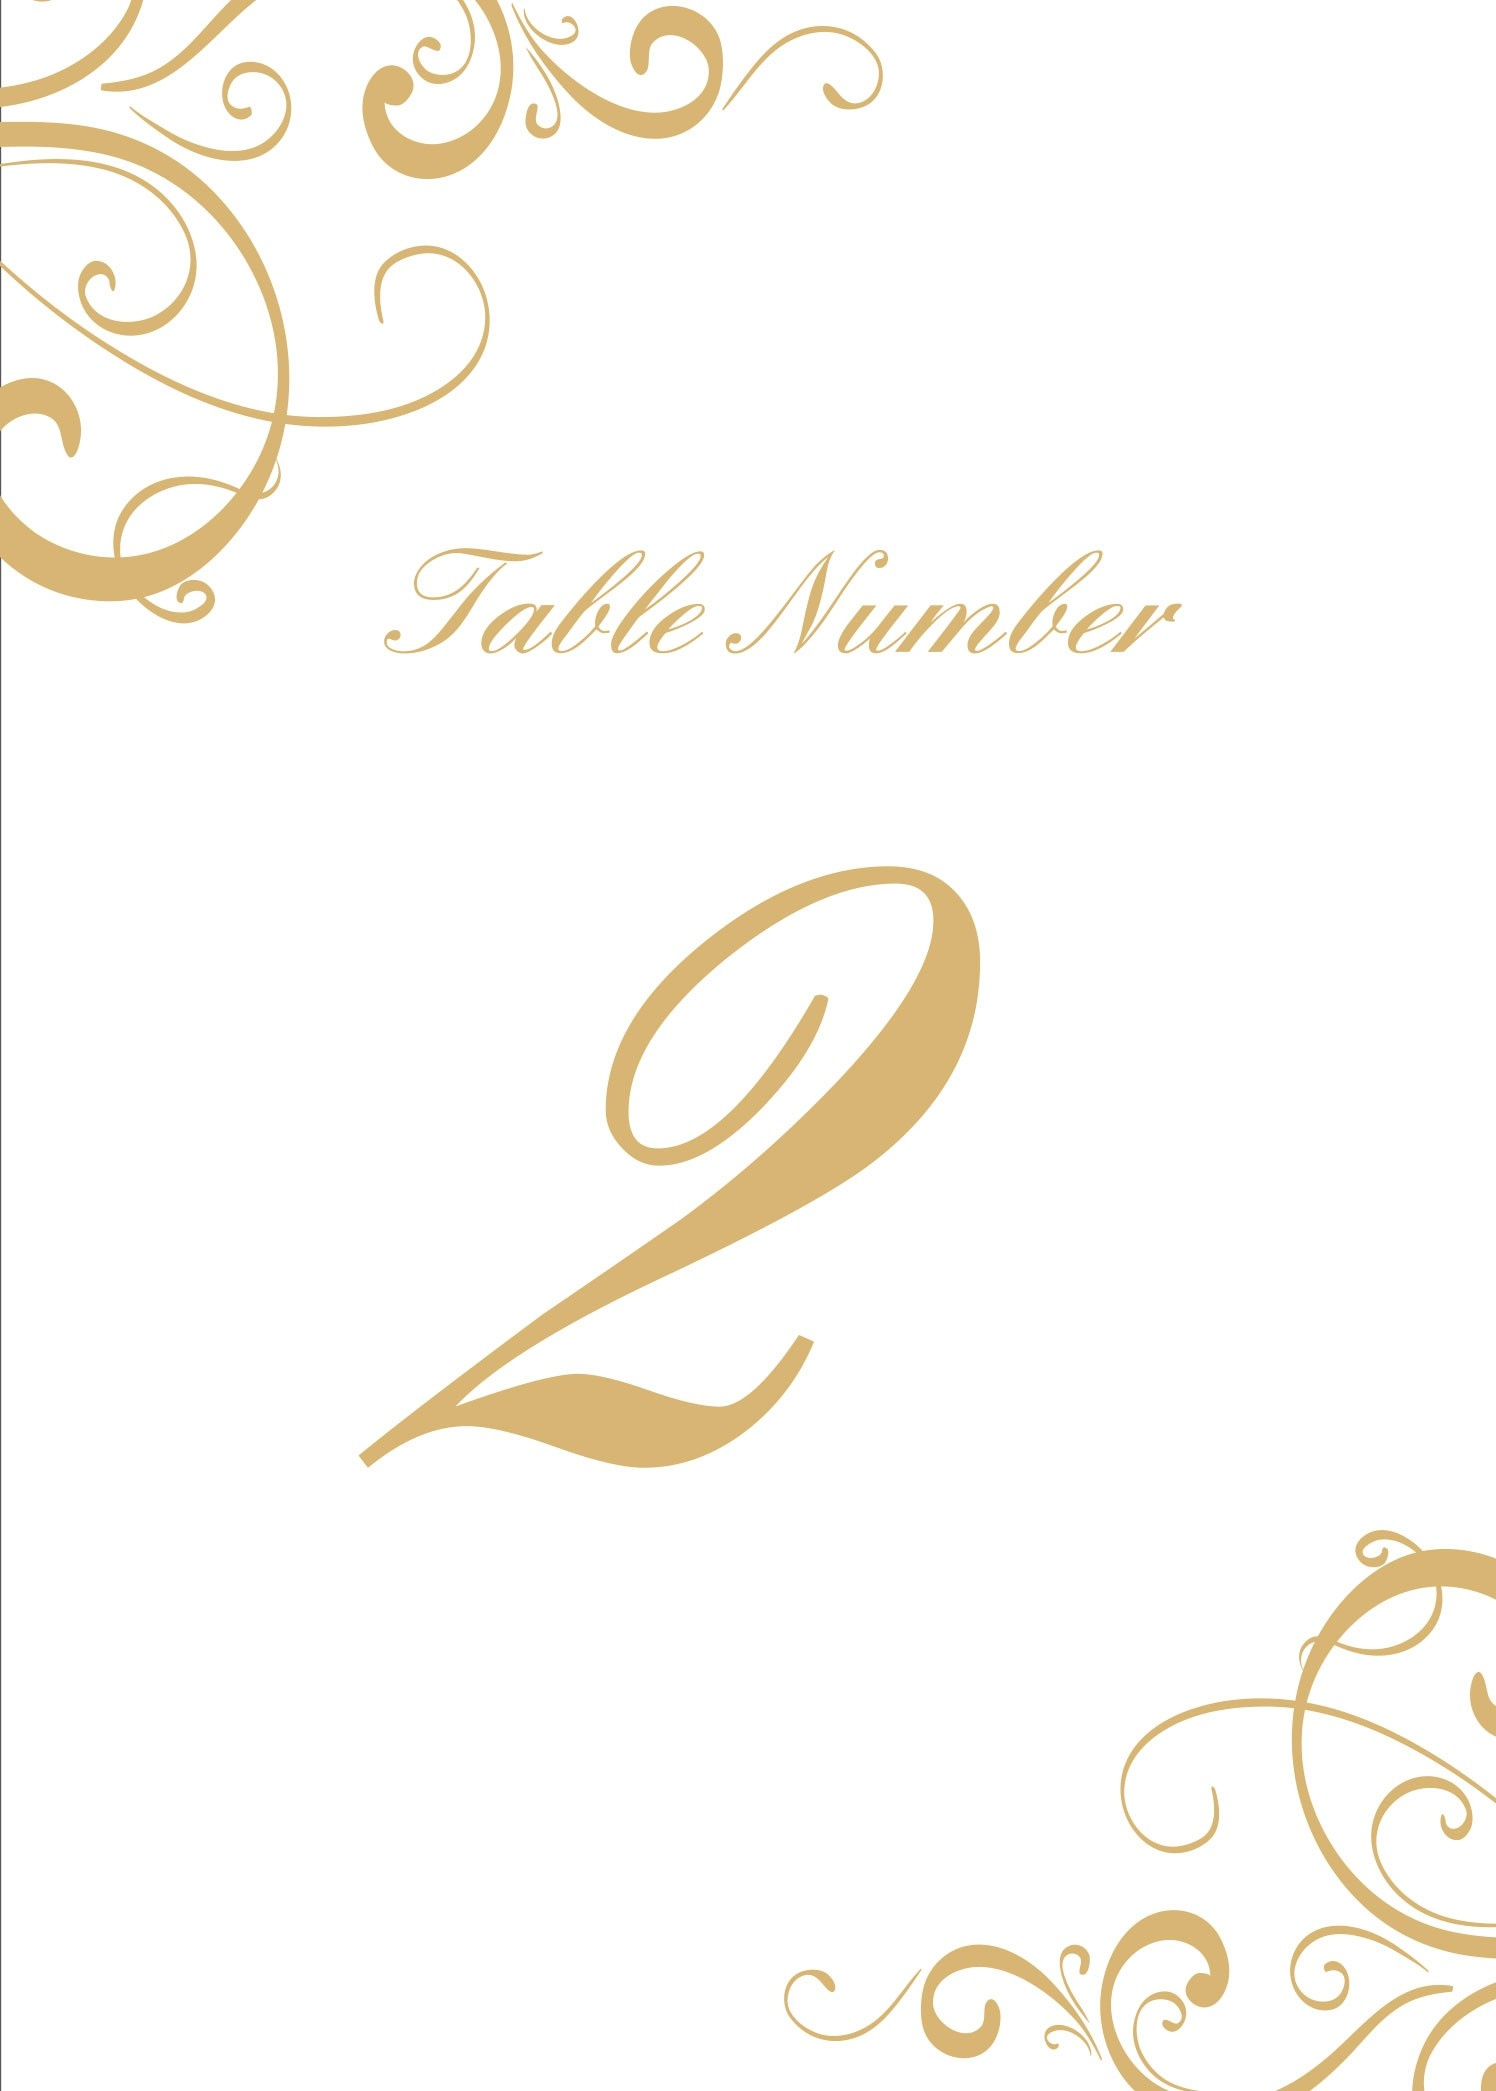 Wedding Table Numbers | Printable Pdfbasic Invite - Free Printable Table Numbers 1 20